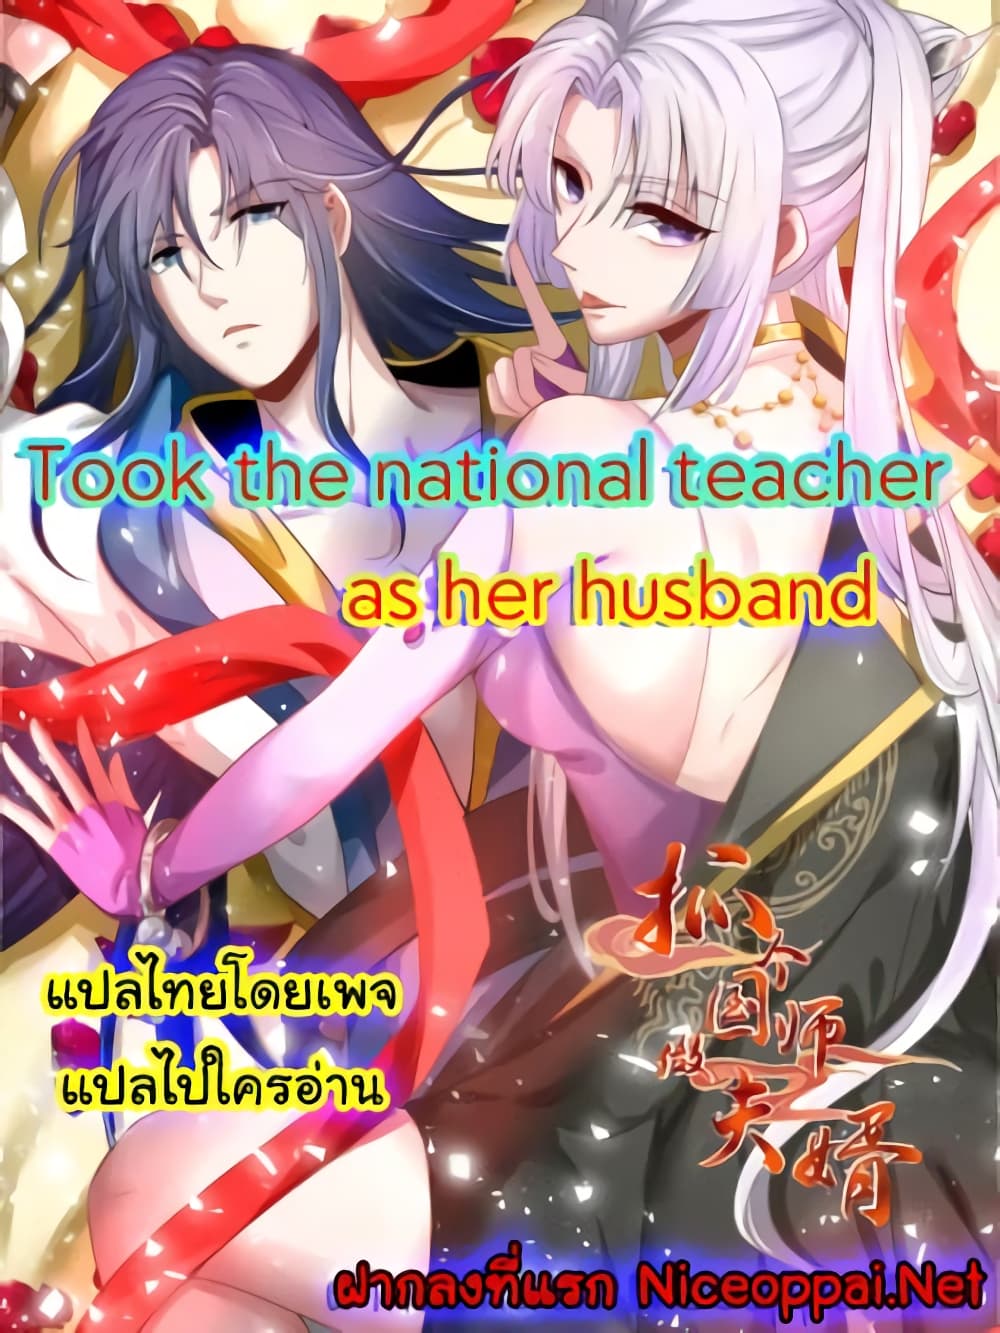 Took the National Teacher as Her Husband 27 (1)